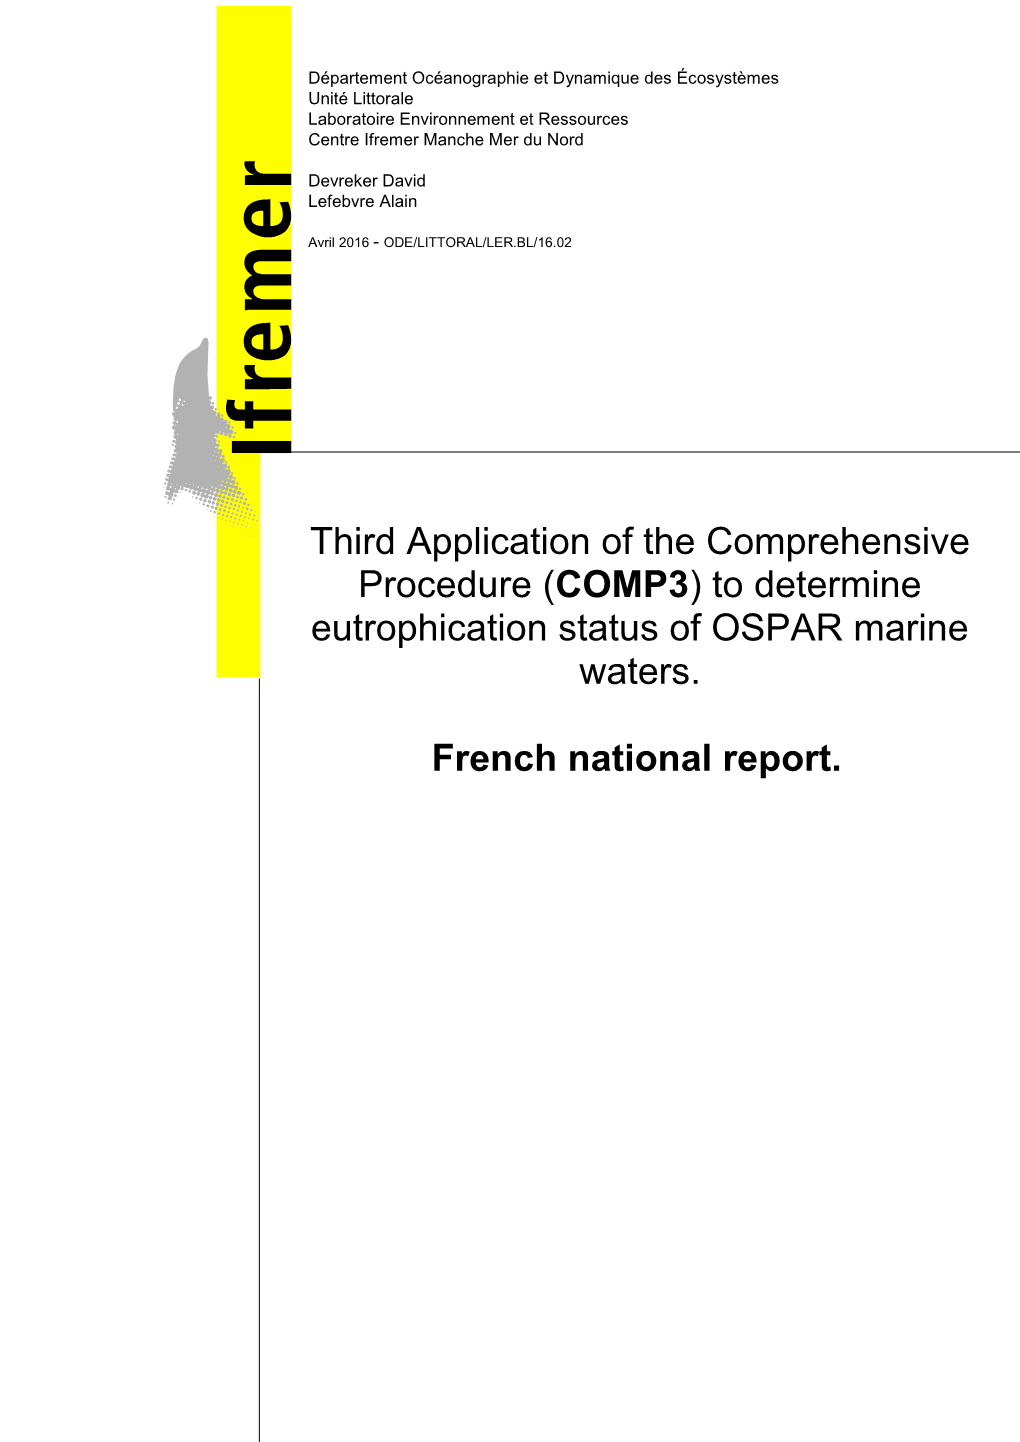 France Common Procedure Report 2016